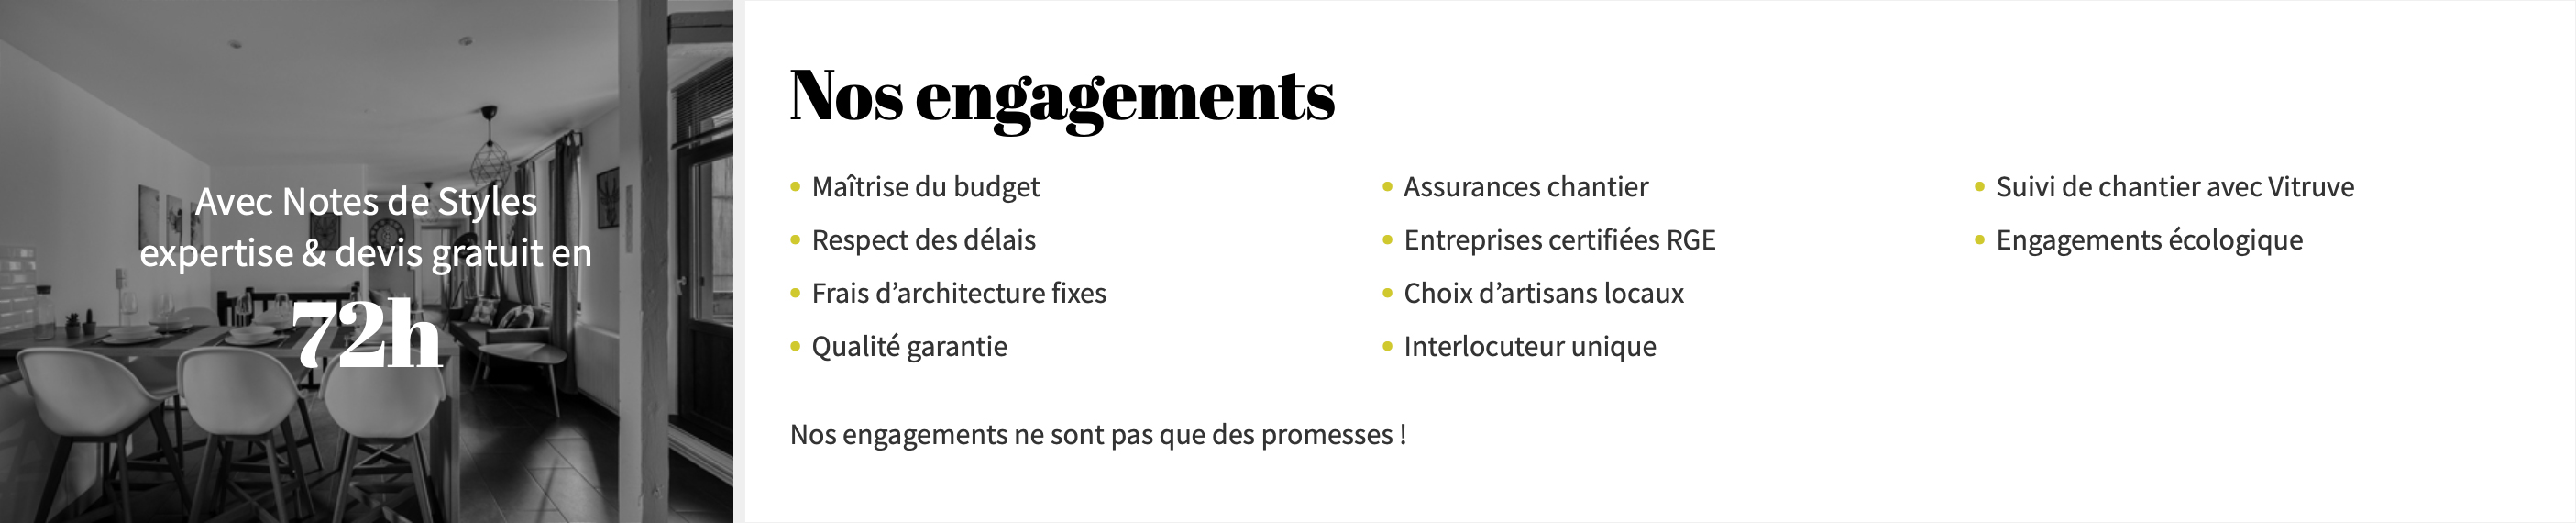 Notes de Styles Narbonne- Nos engagements